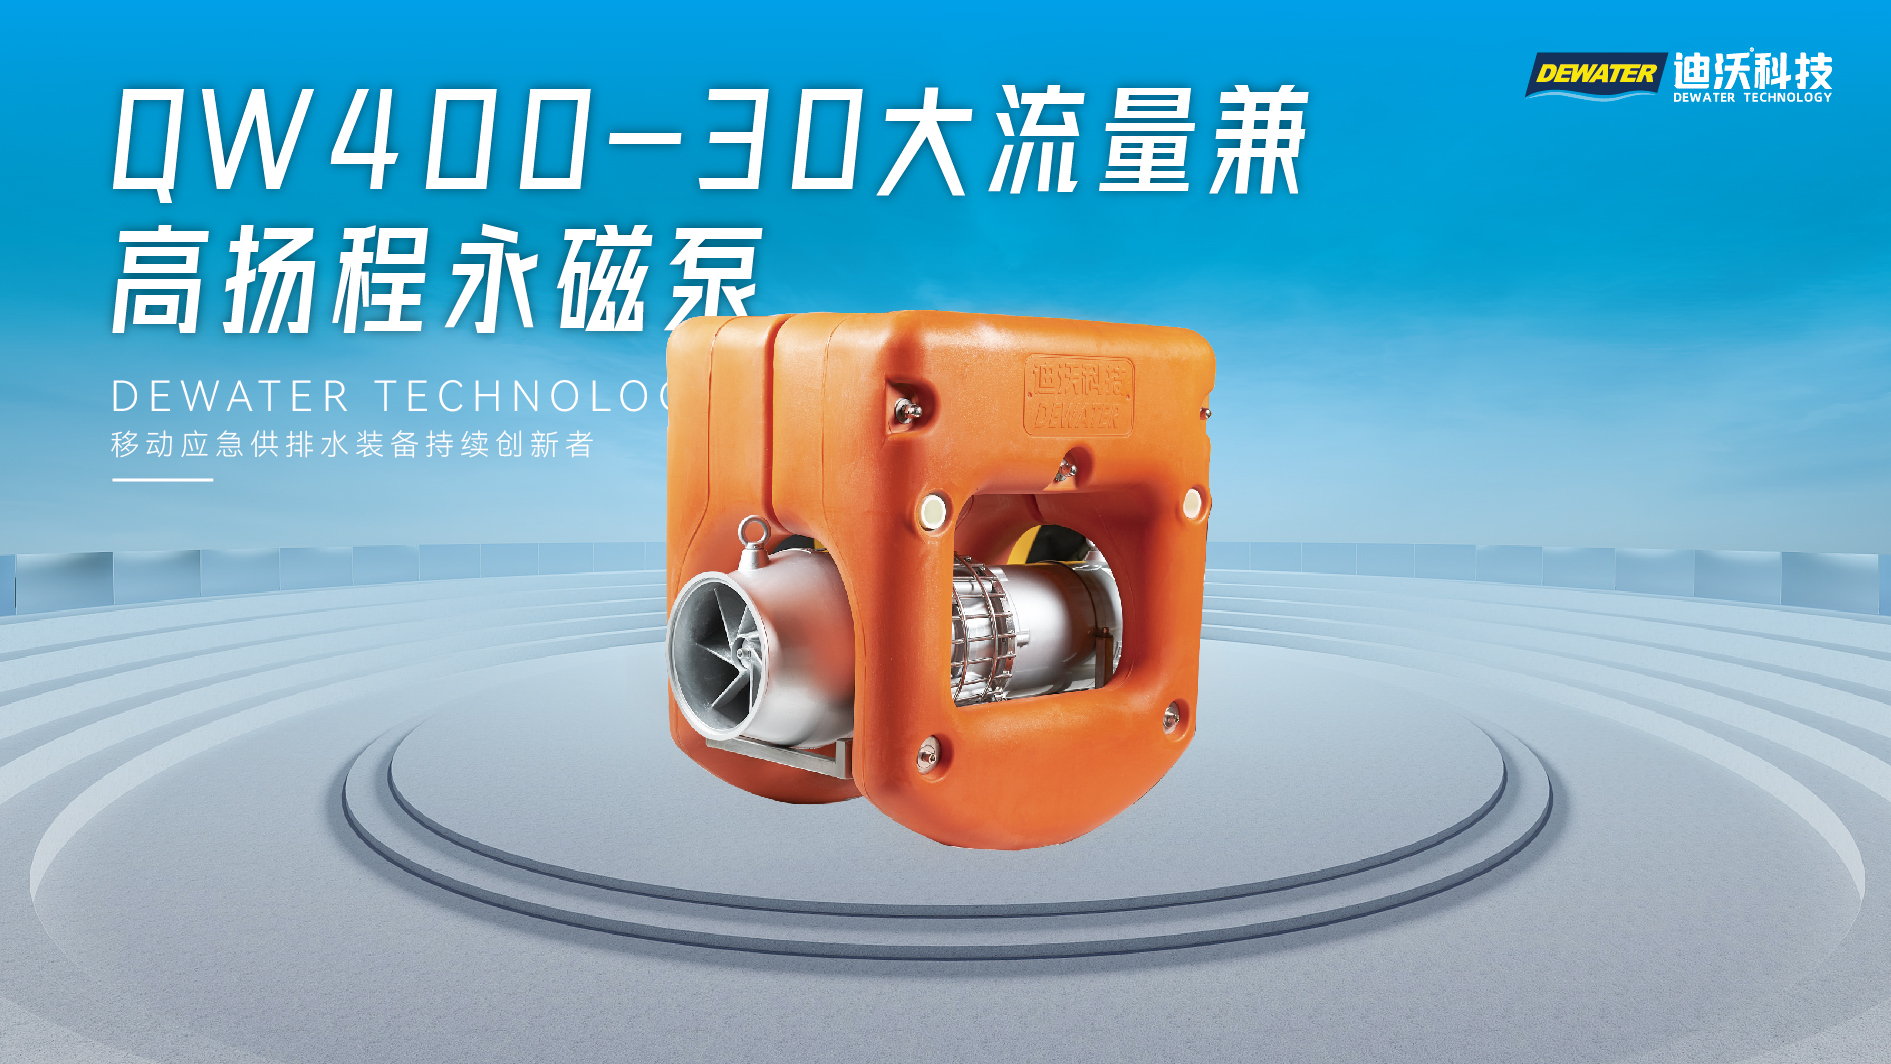  jn体育官网QW400-30大流量兼高扬程永磁泵